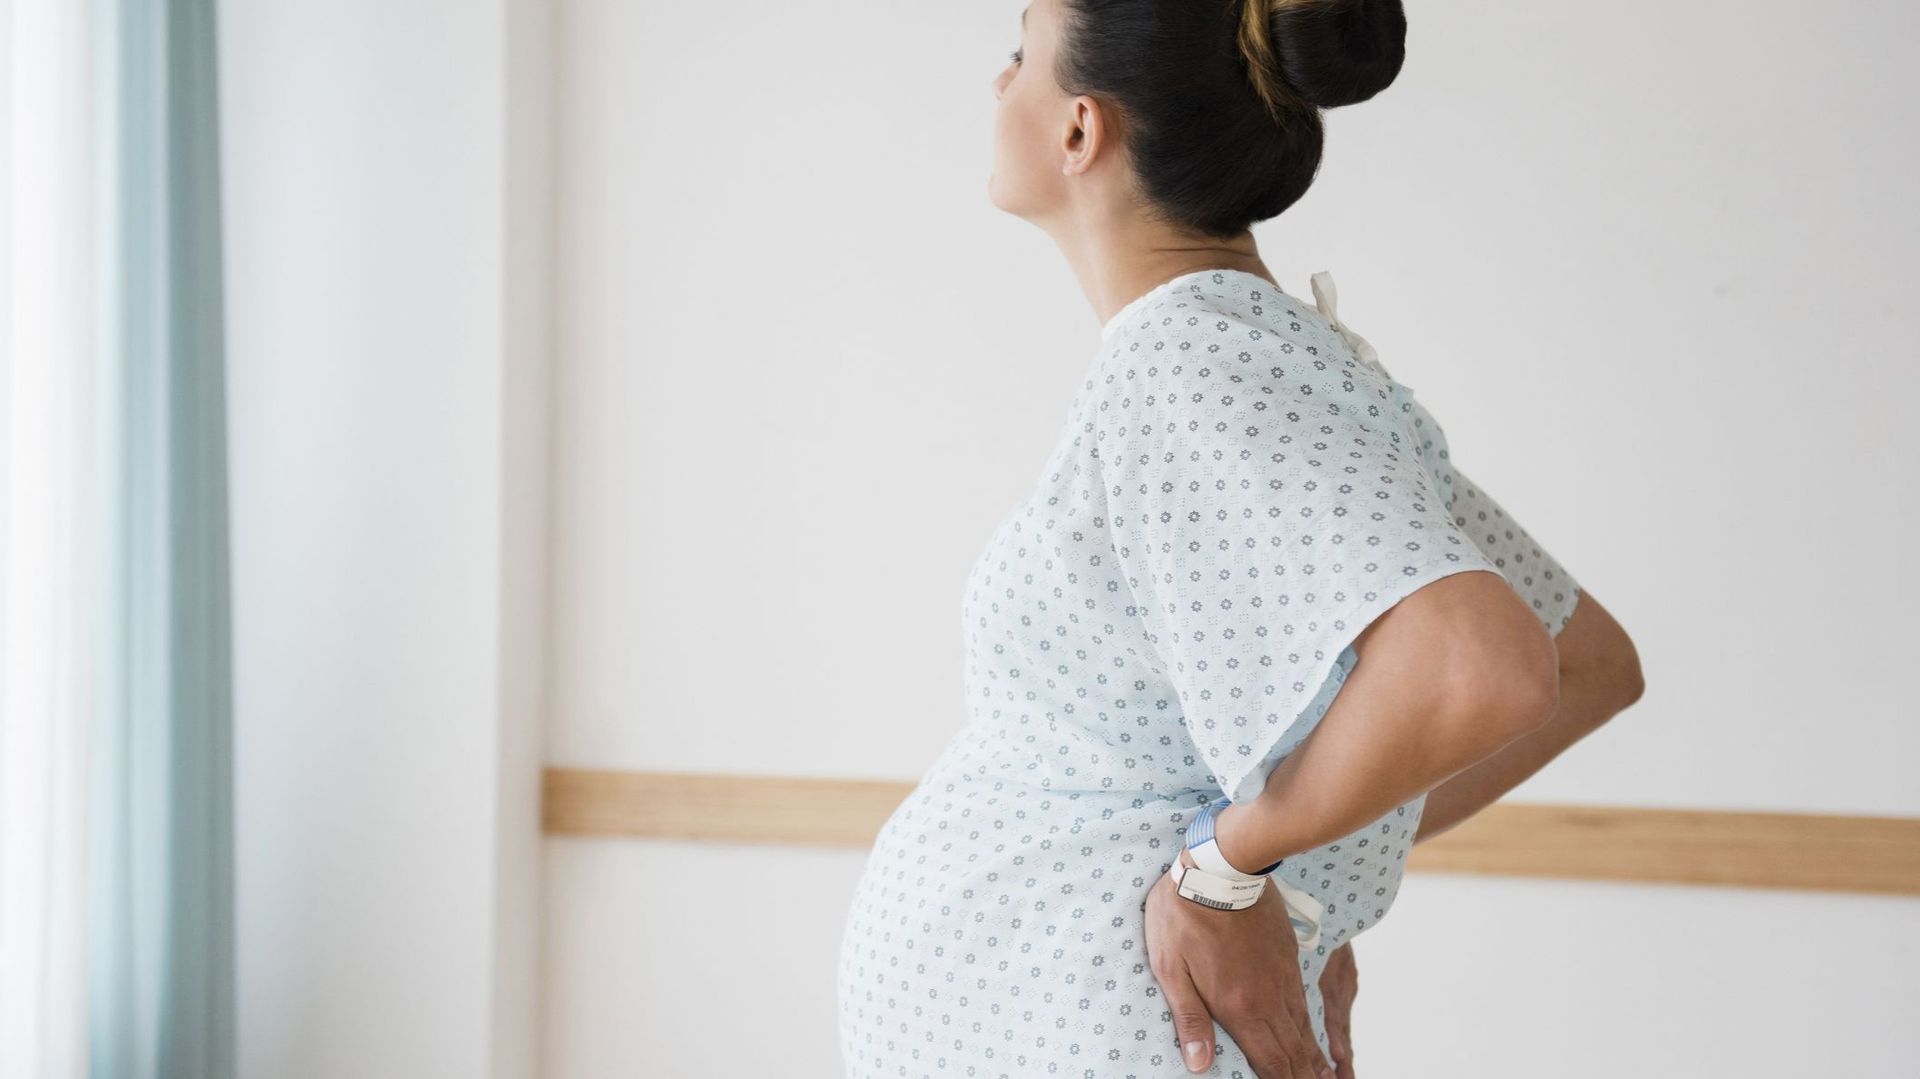 Femmes enceintes et coronavirus: respectons leur accouchement 